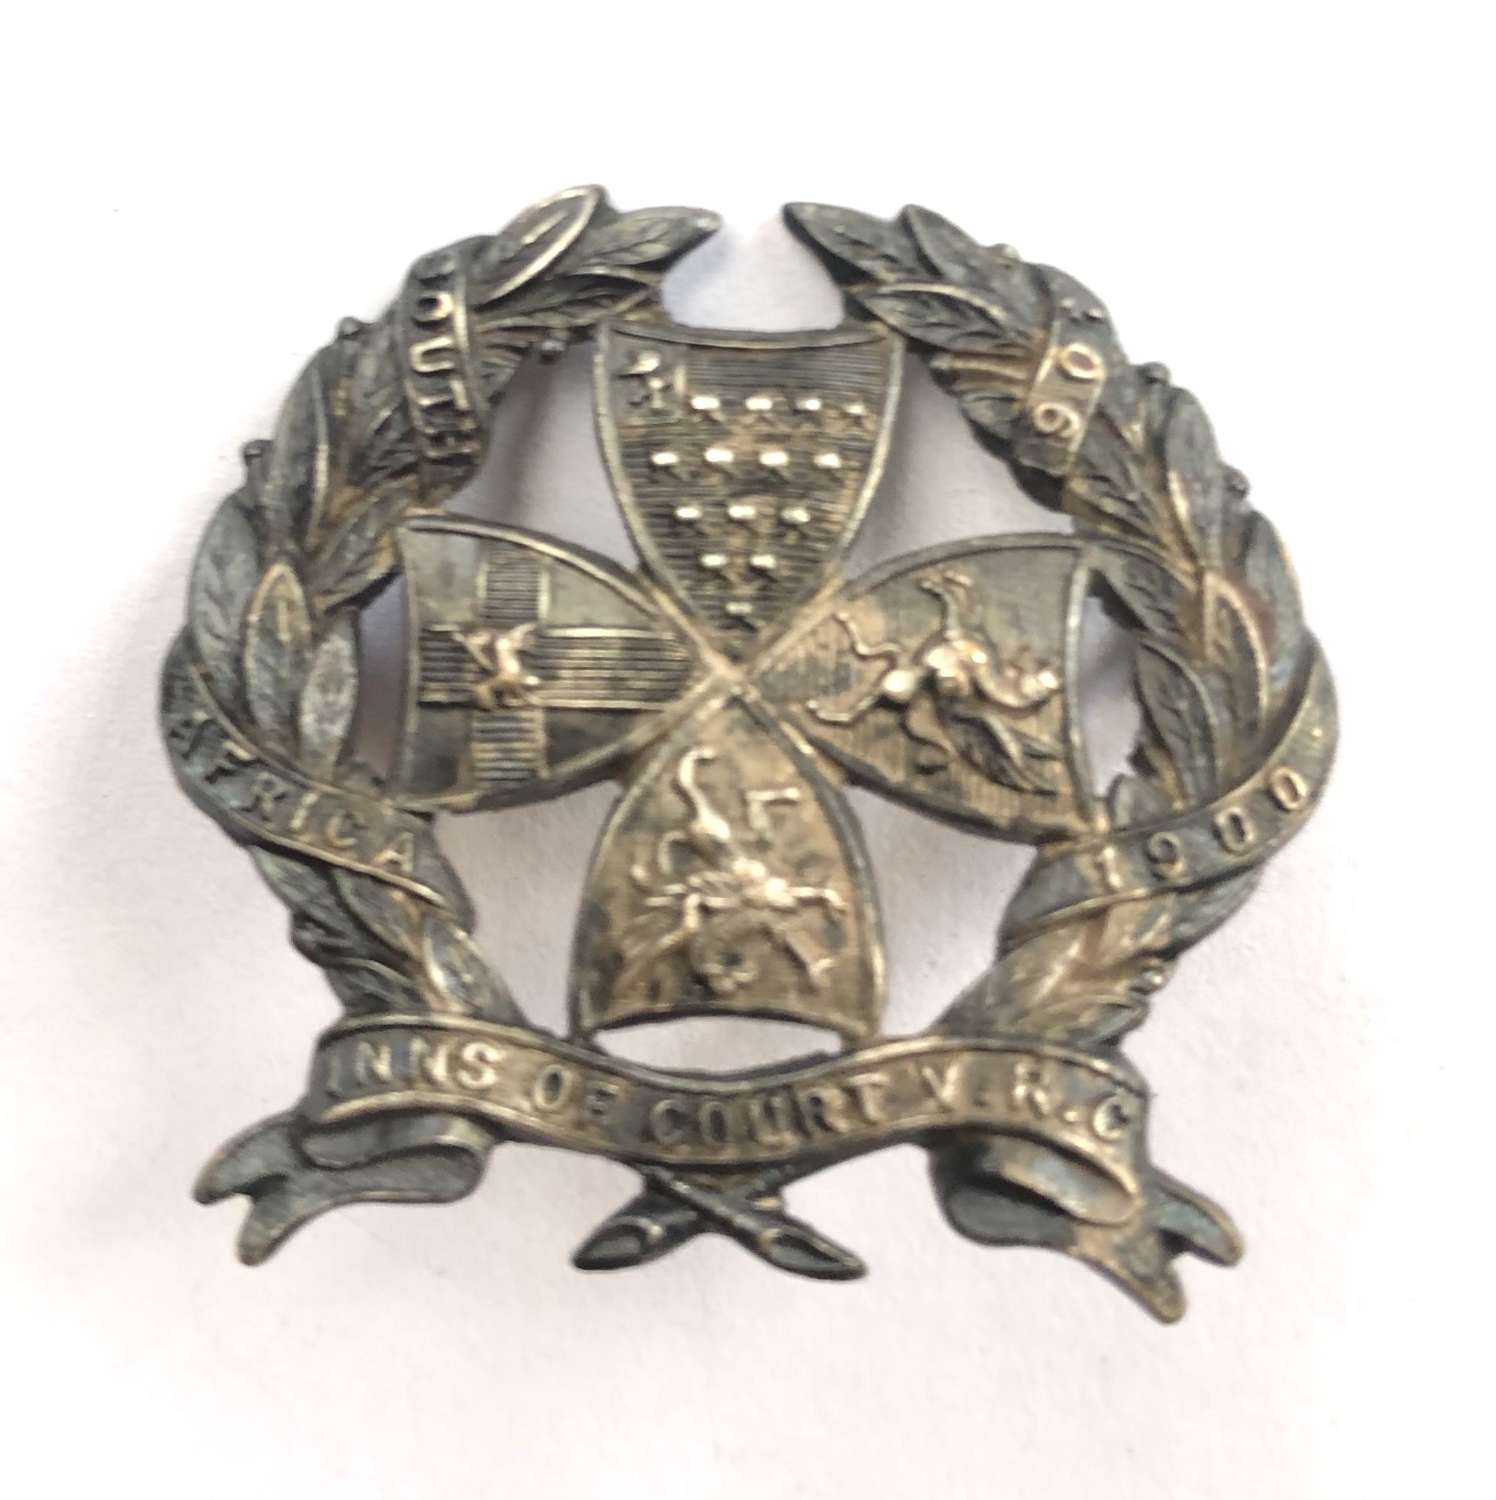 Inns of Court Edwardian Officer's cap badge c1905-08 only